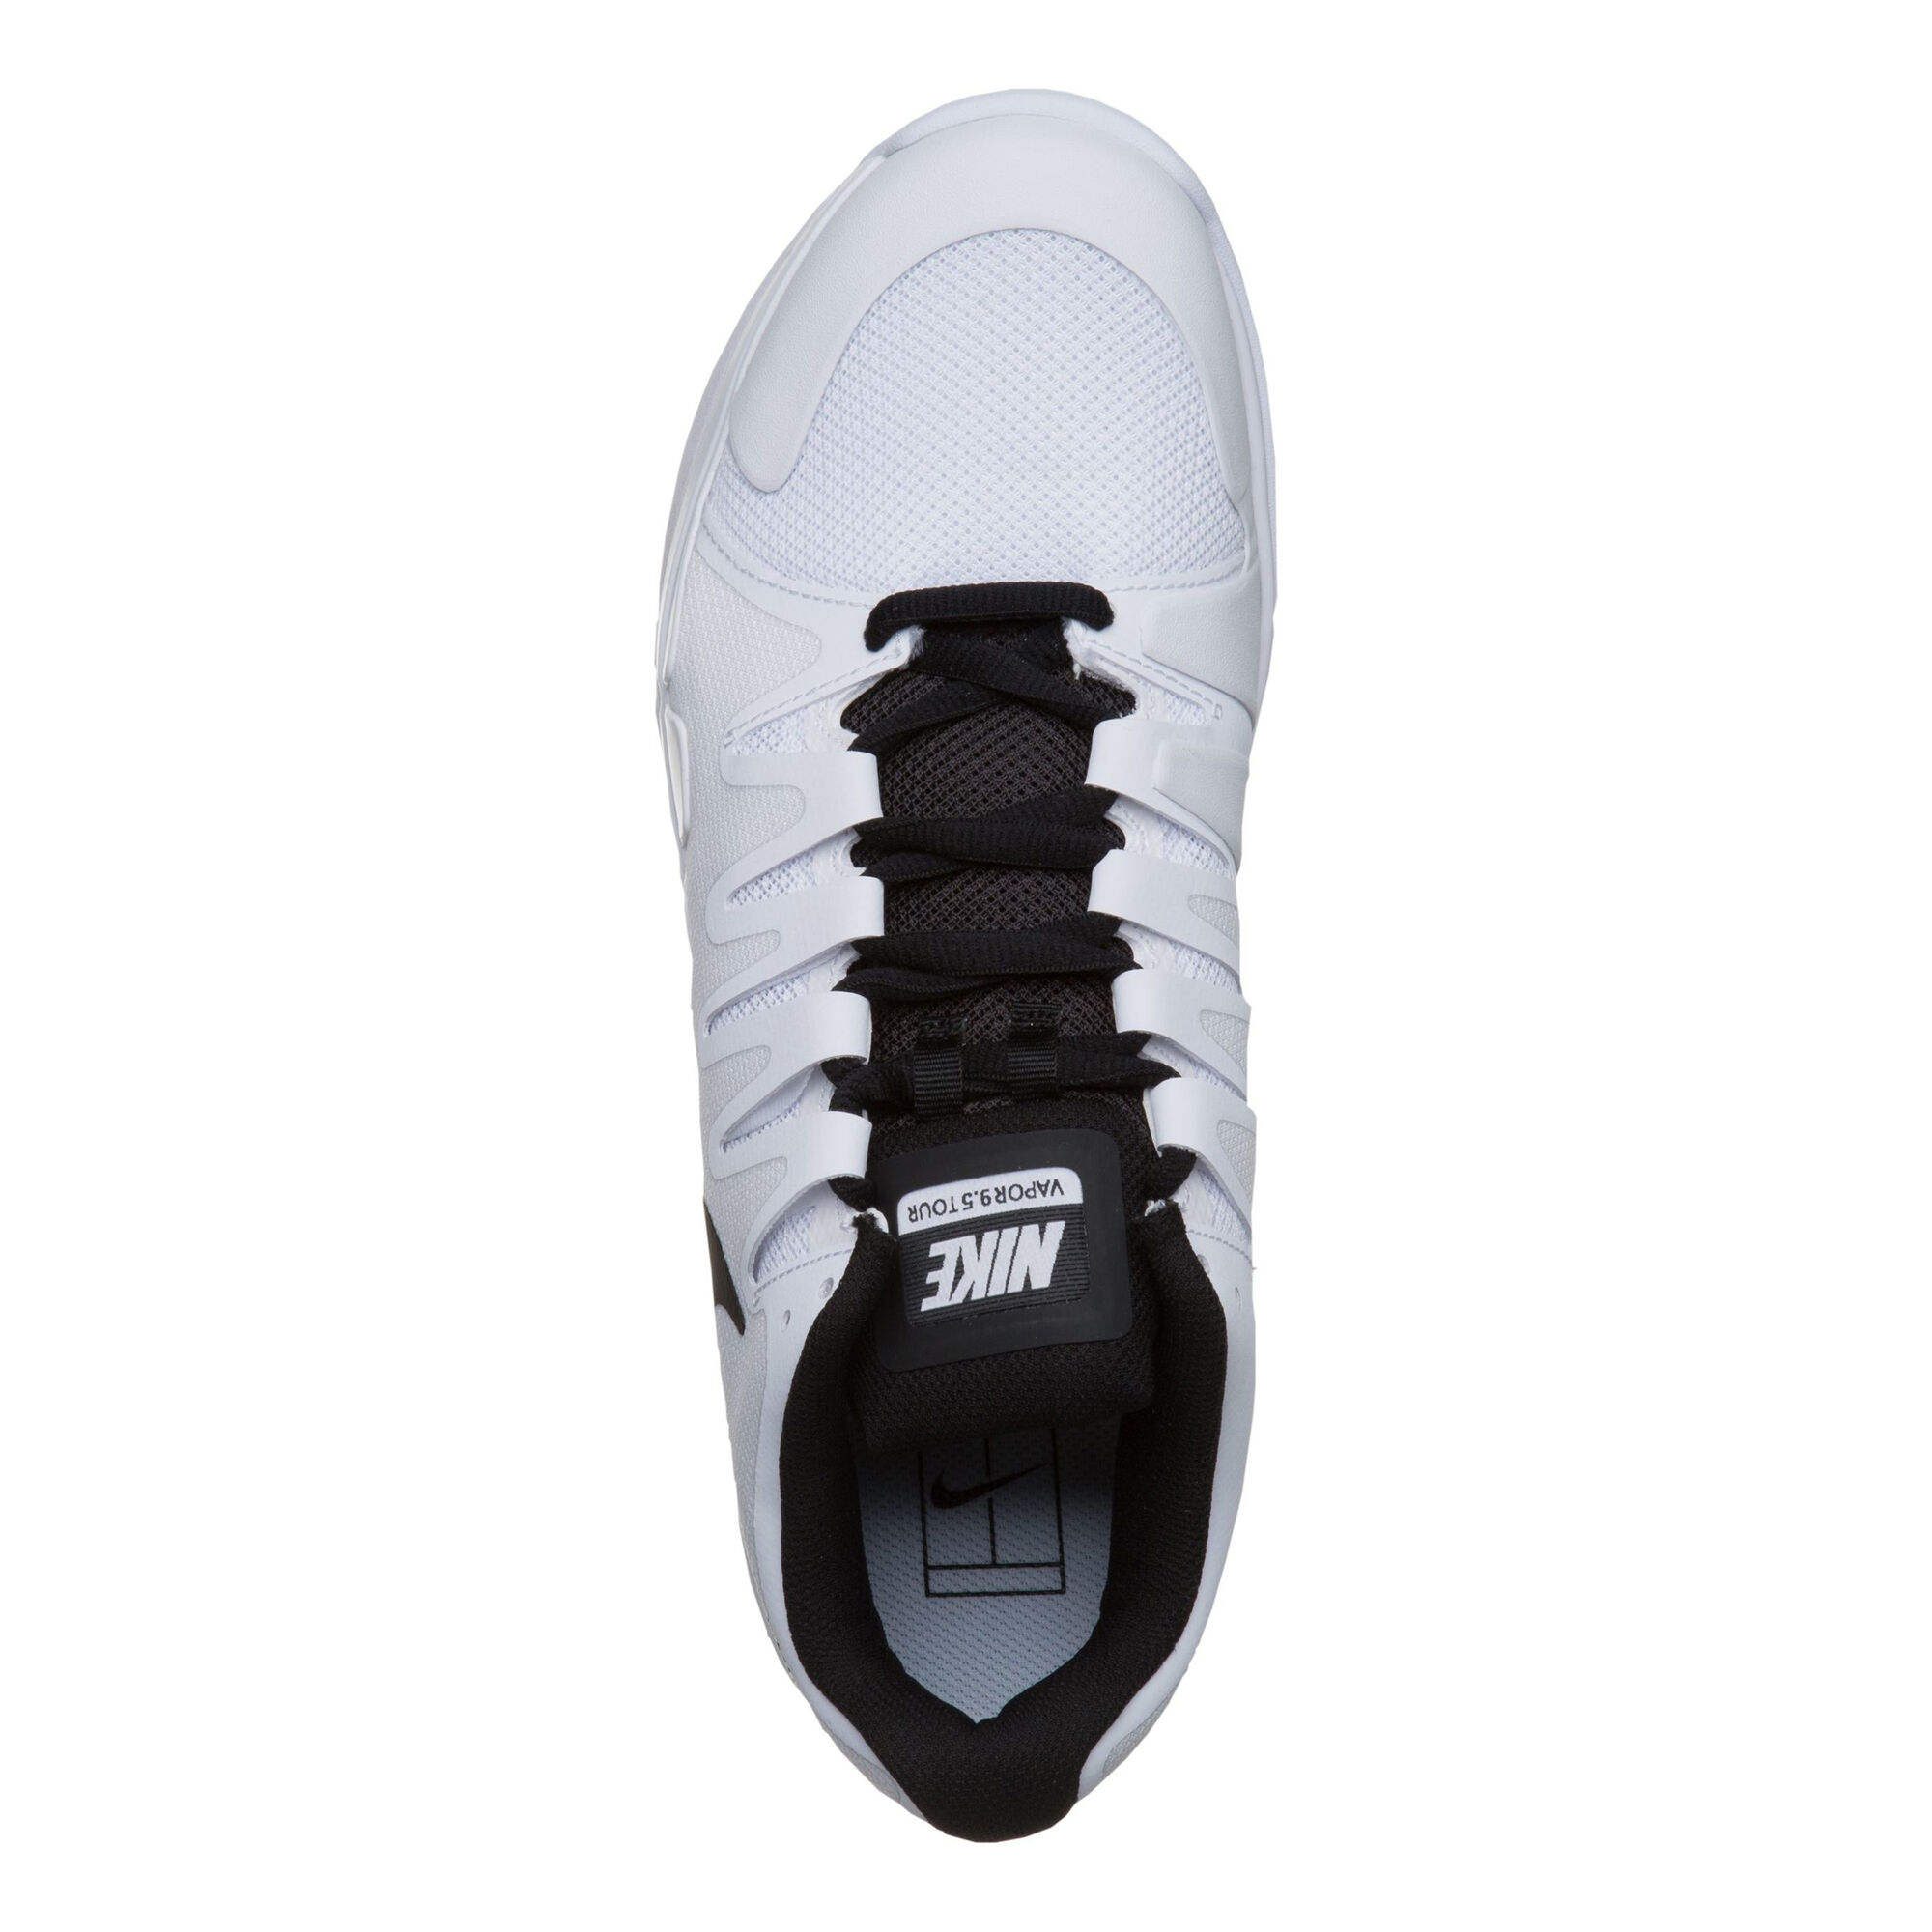 Nike Zoom 9.5 Tour Carpet Zapatilla Cubierta Hombres - Blanco, Negro compra online | Tennis-Point